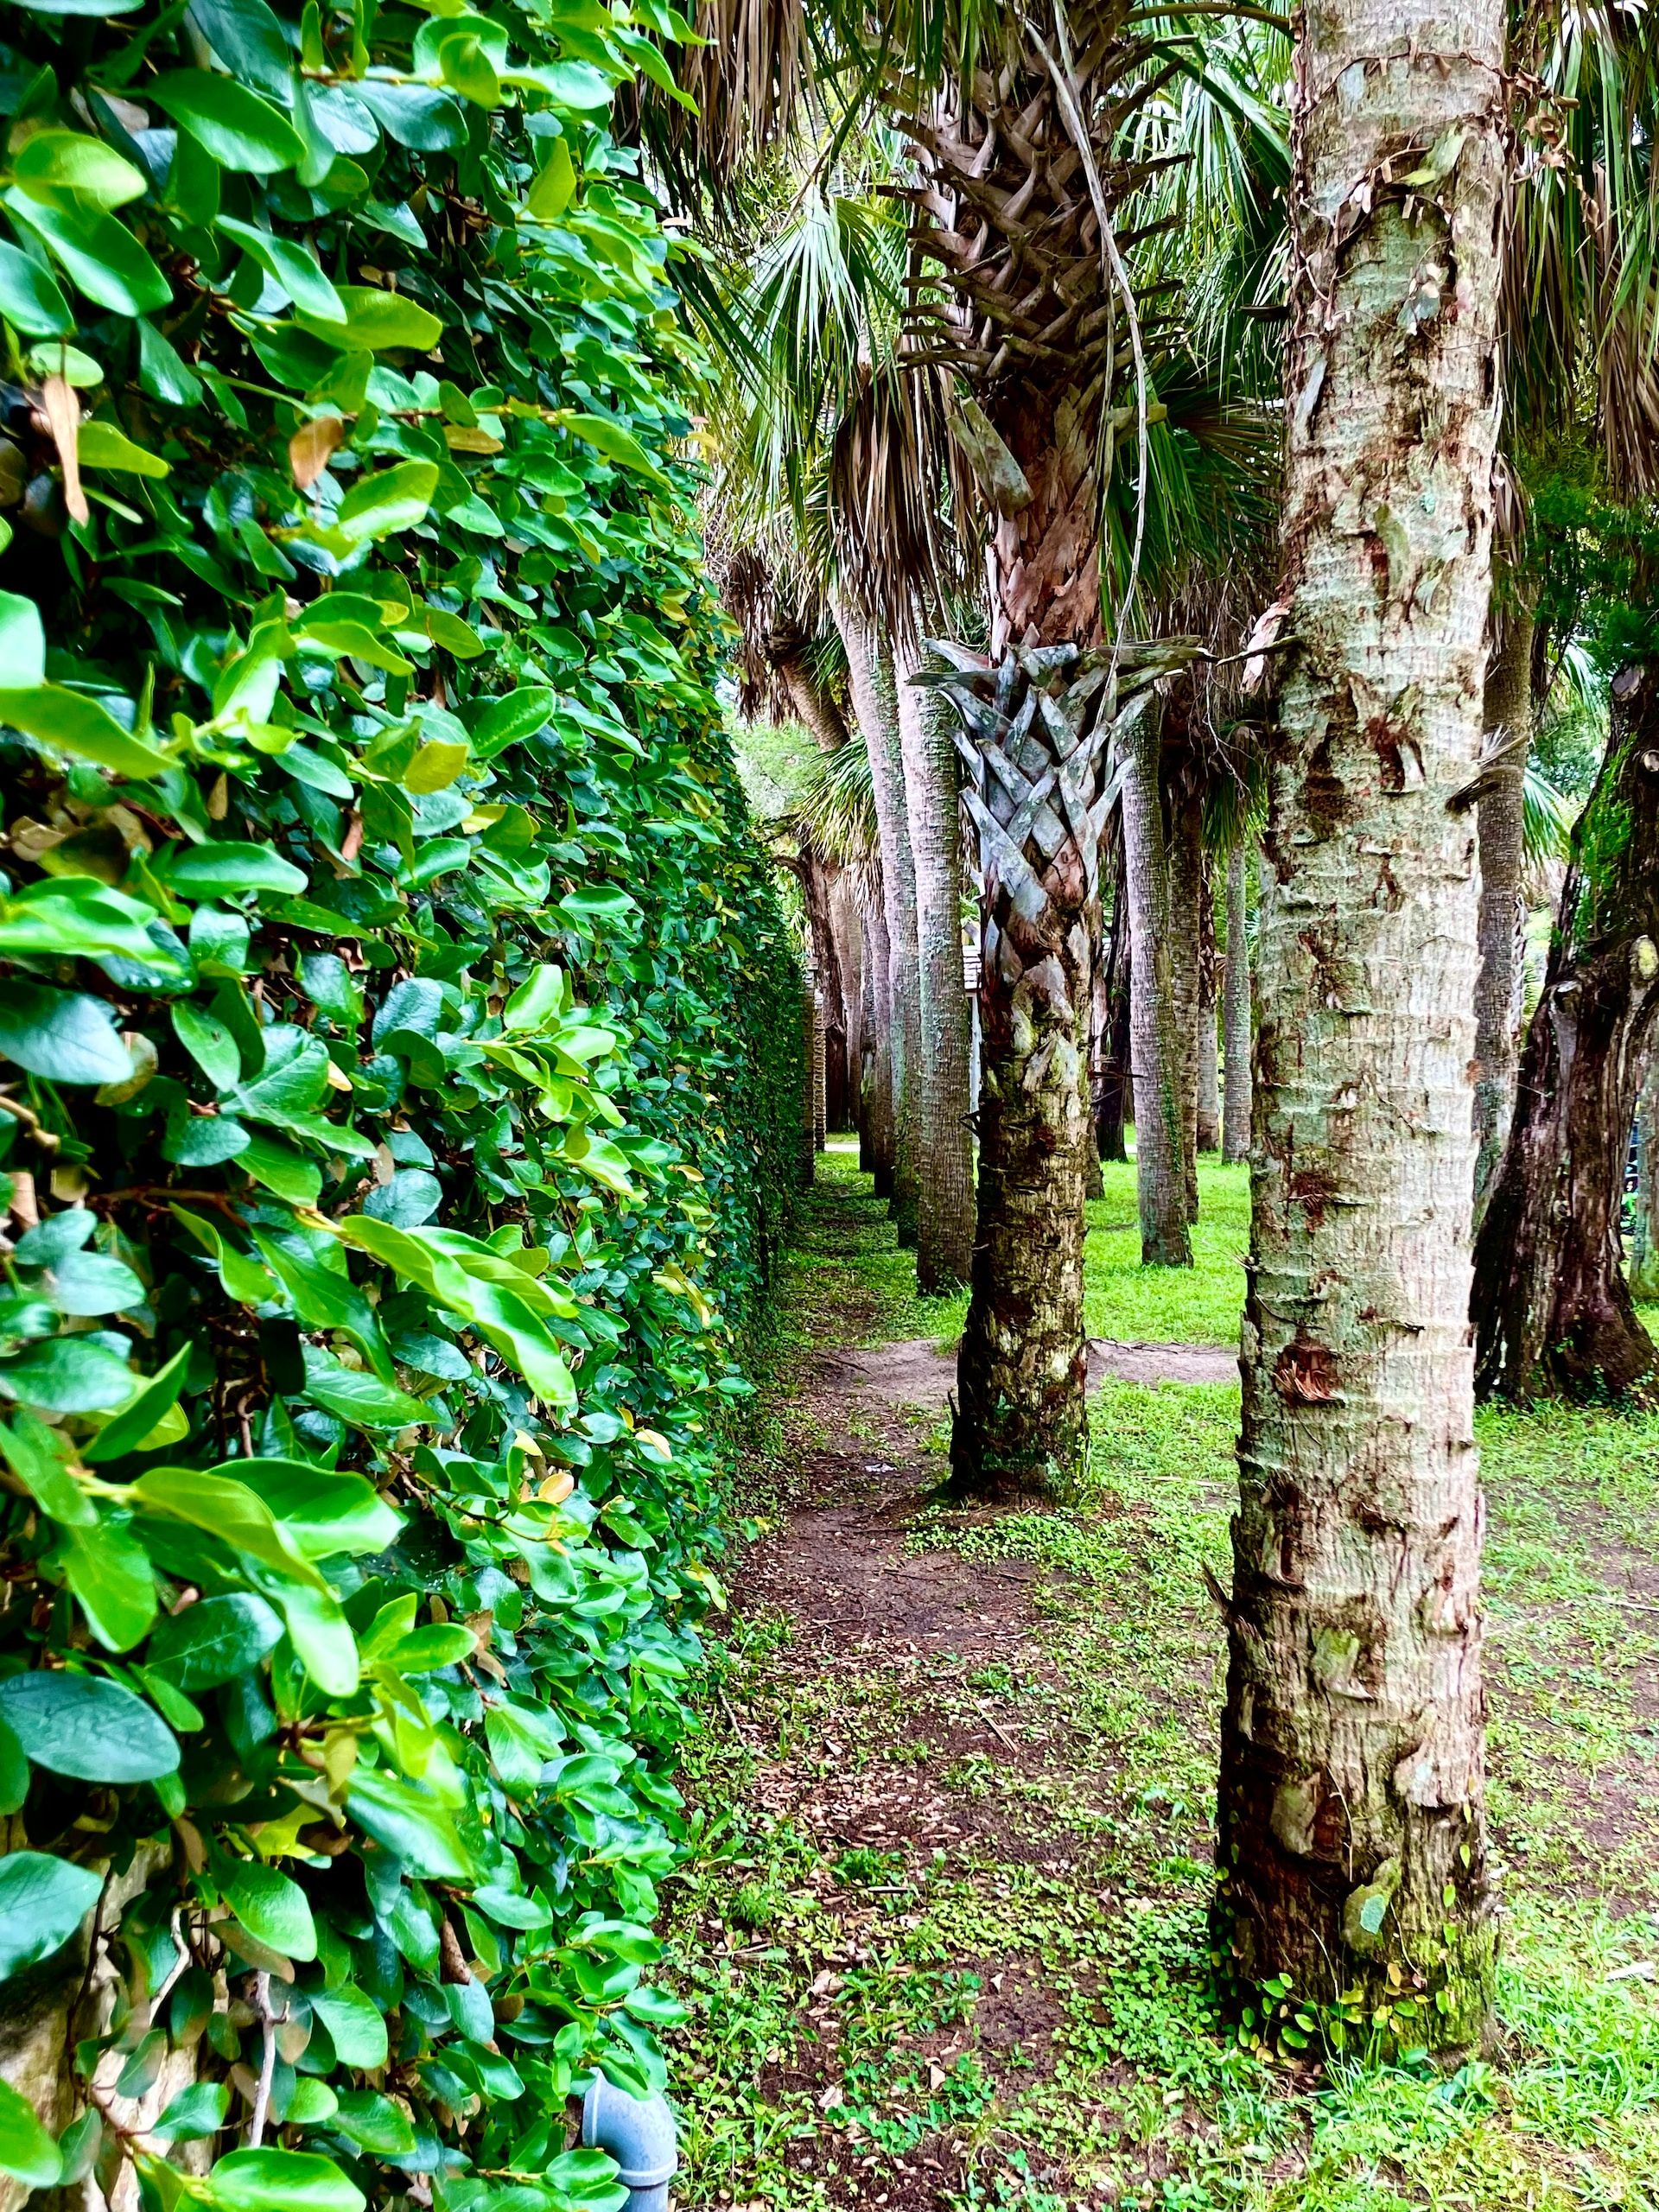 Vegetation growing inside historic fort in Myrtle Beach